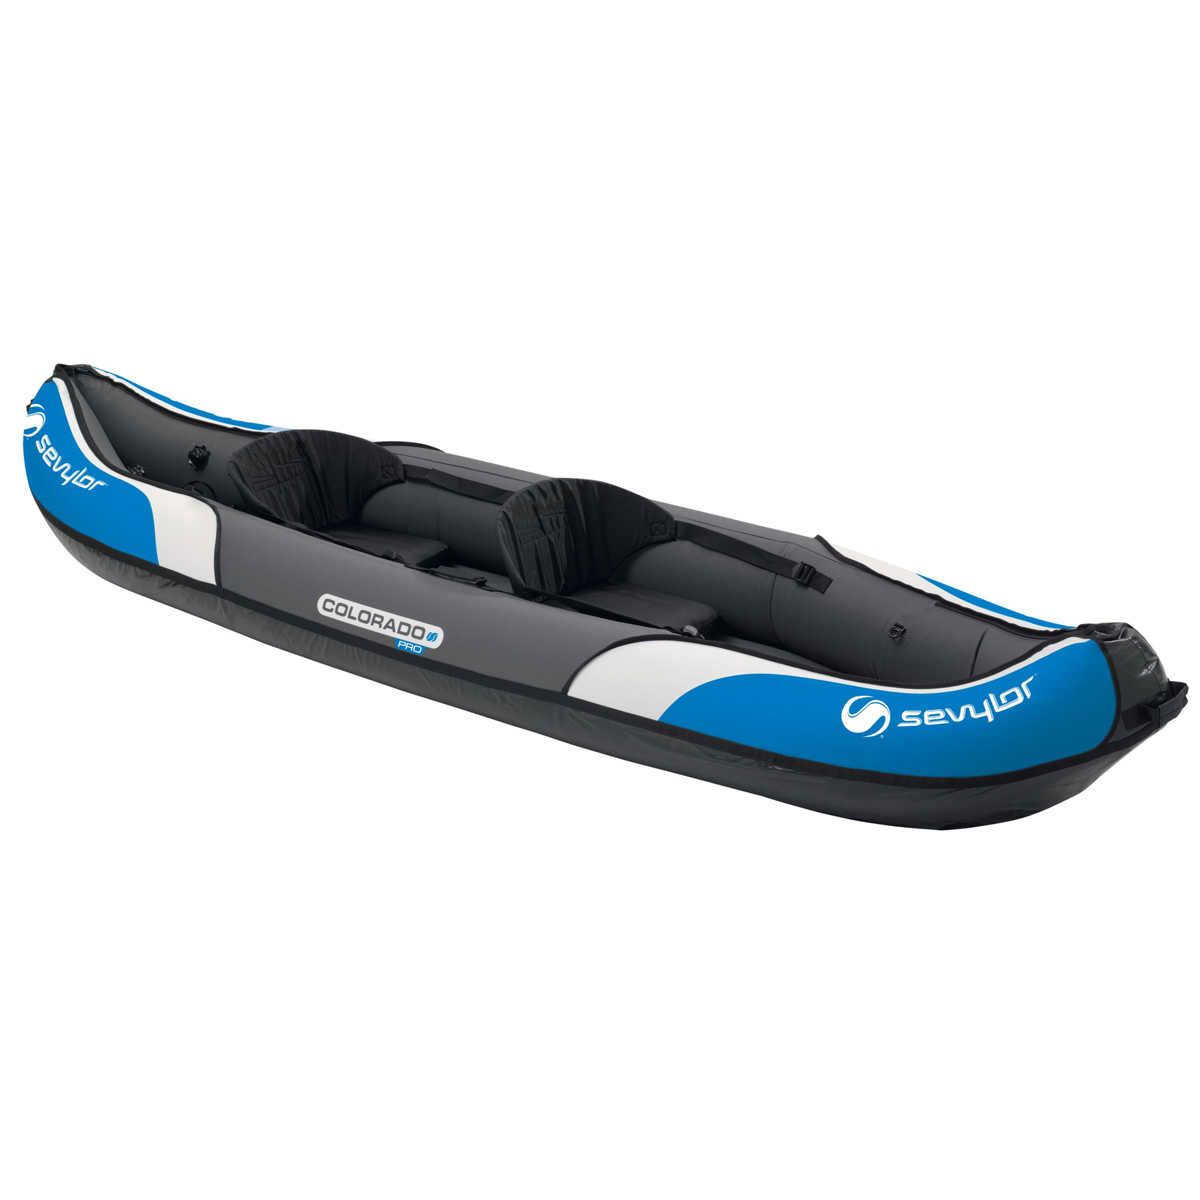 Kit Kayak Gonflable Colorado Pro - 2 personnes - Bleu